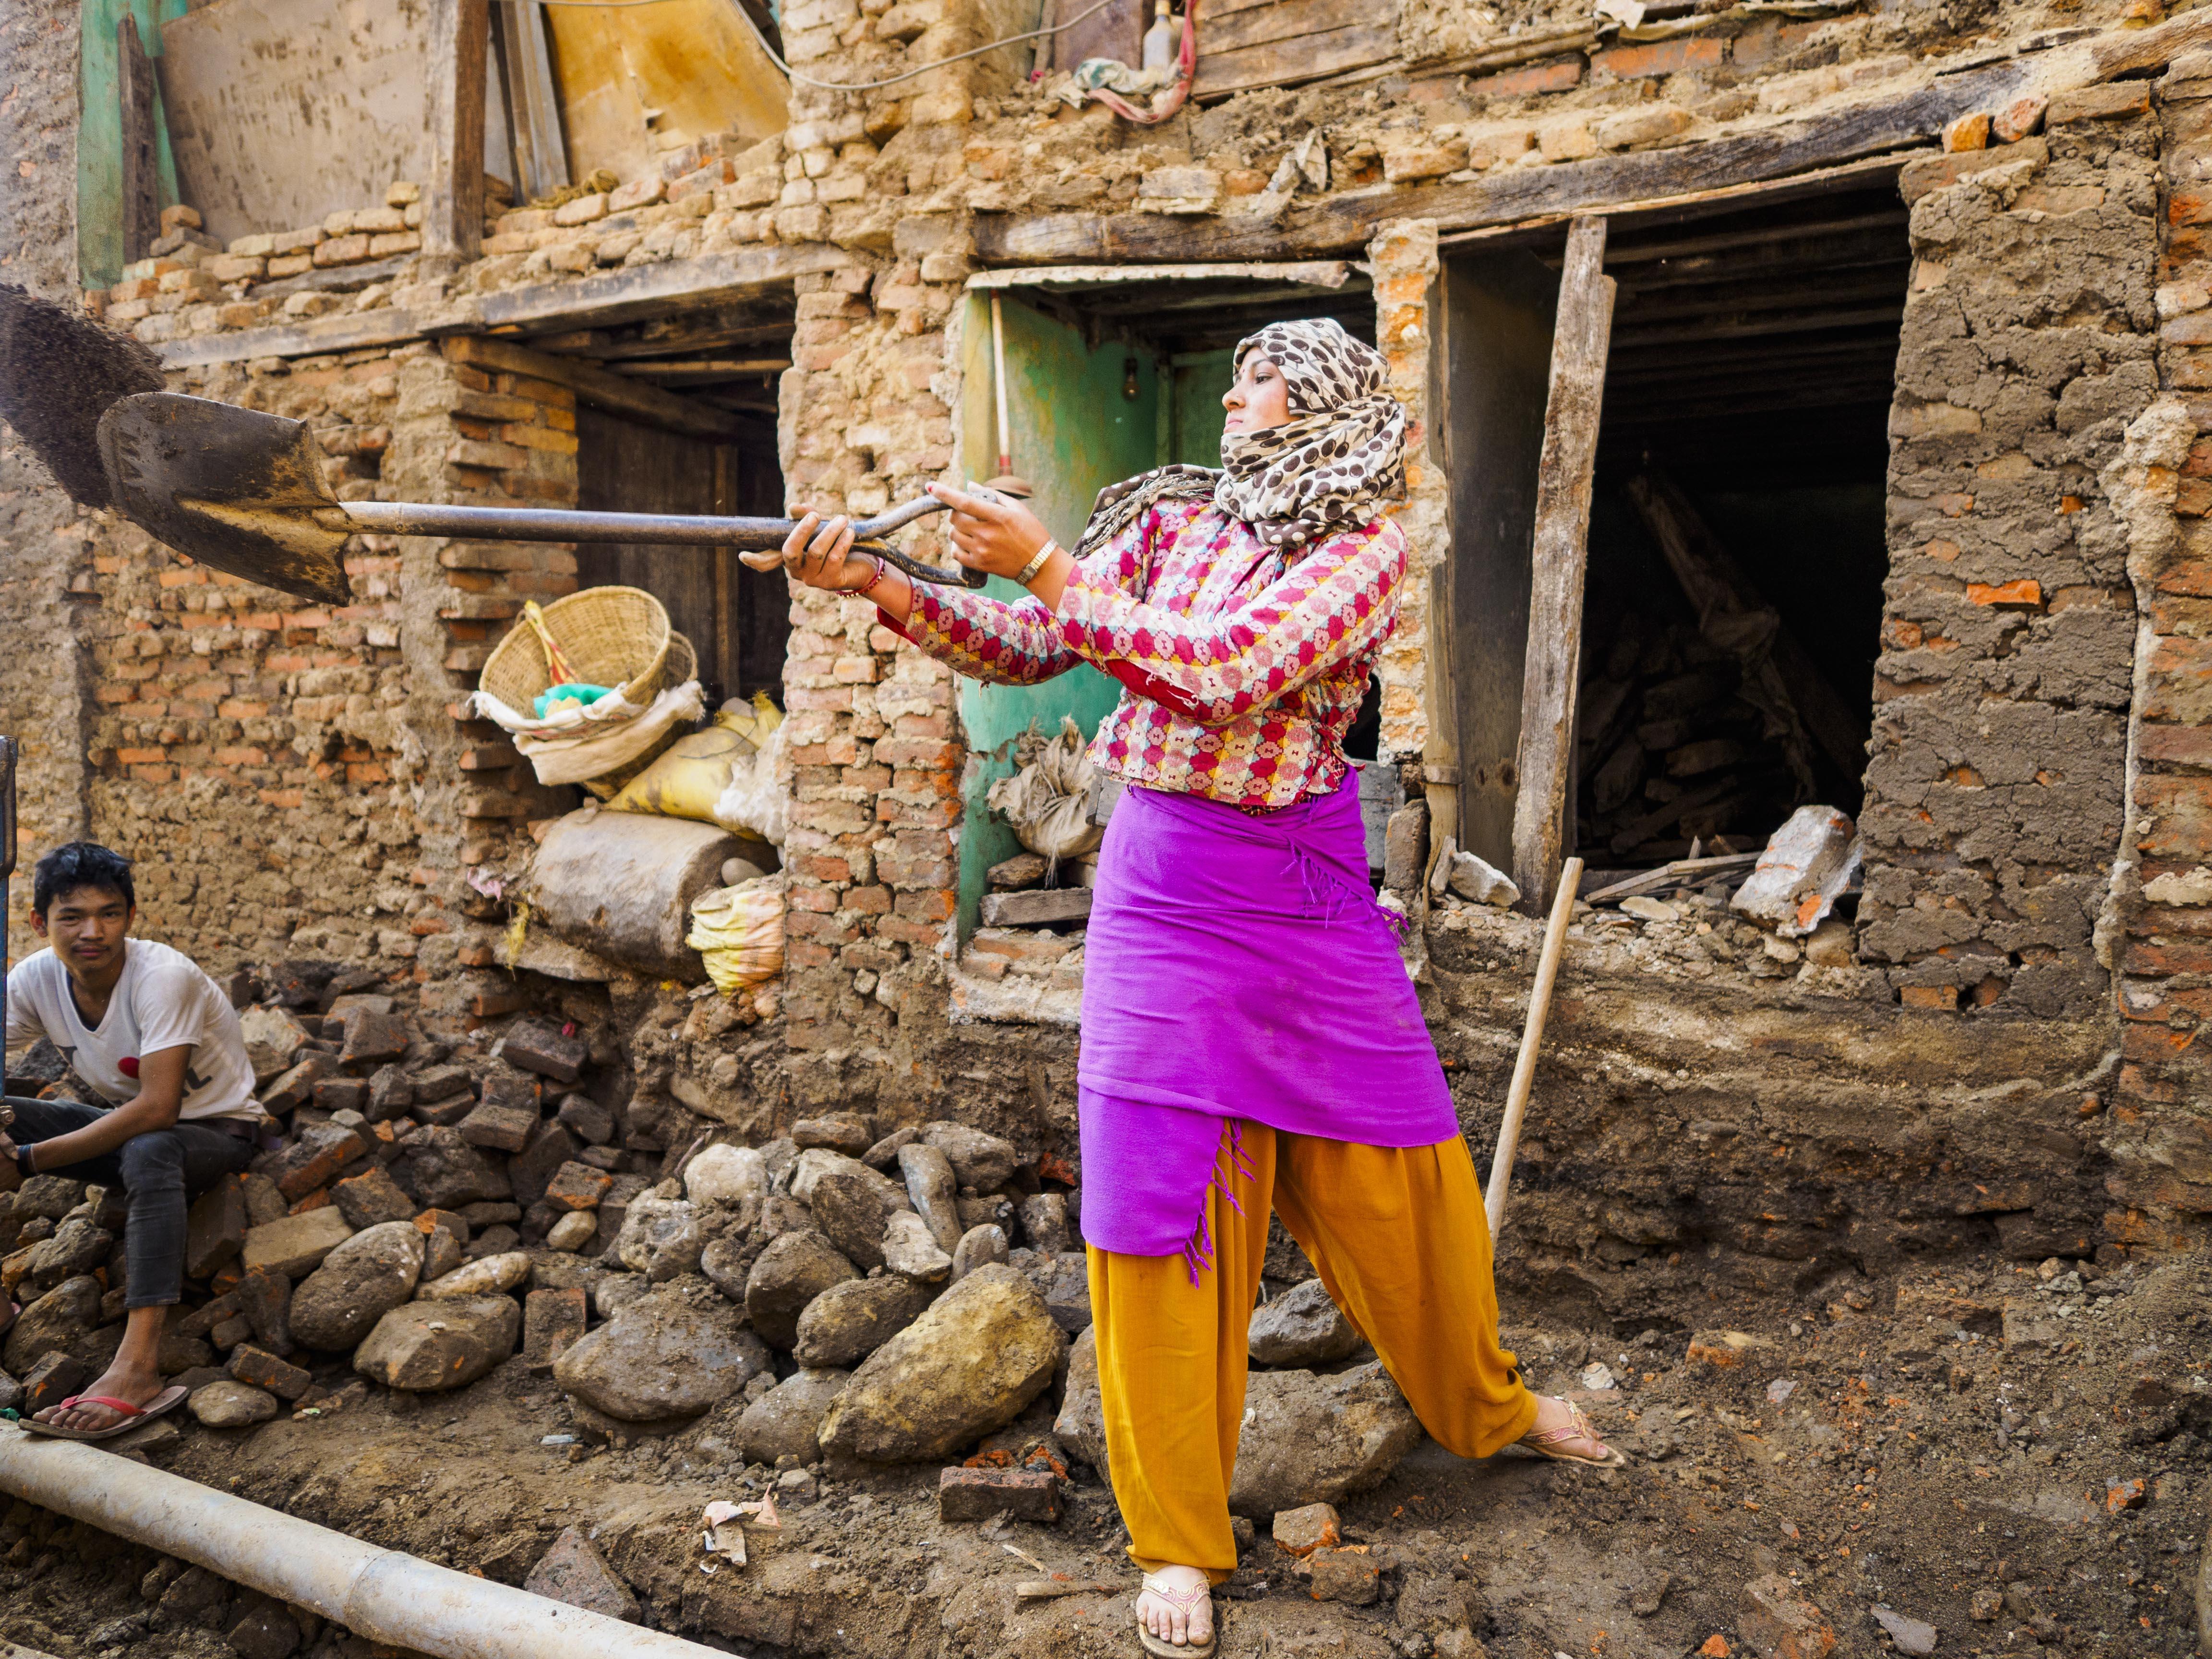 BRICK by BRICK: Rebuilding Nepal